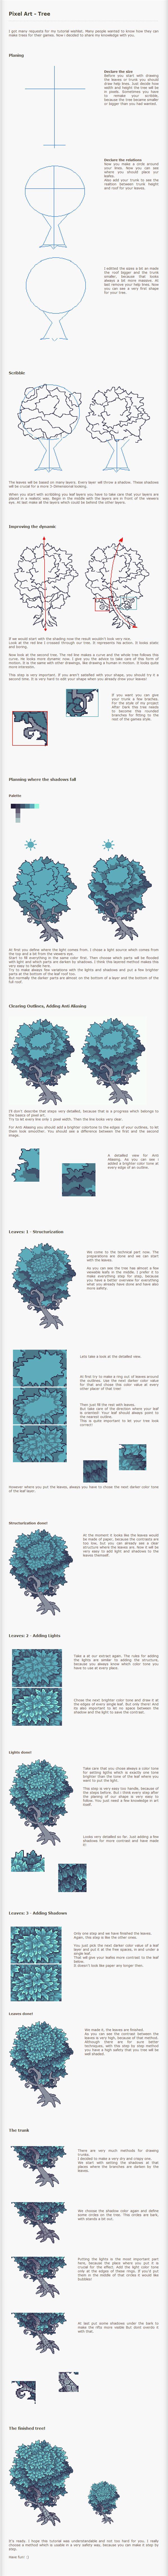 Pixel Art How to Create a Tree